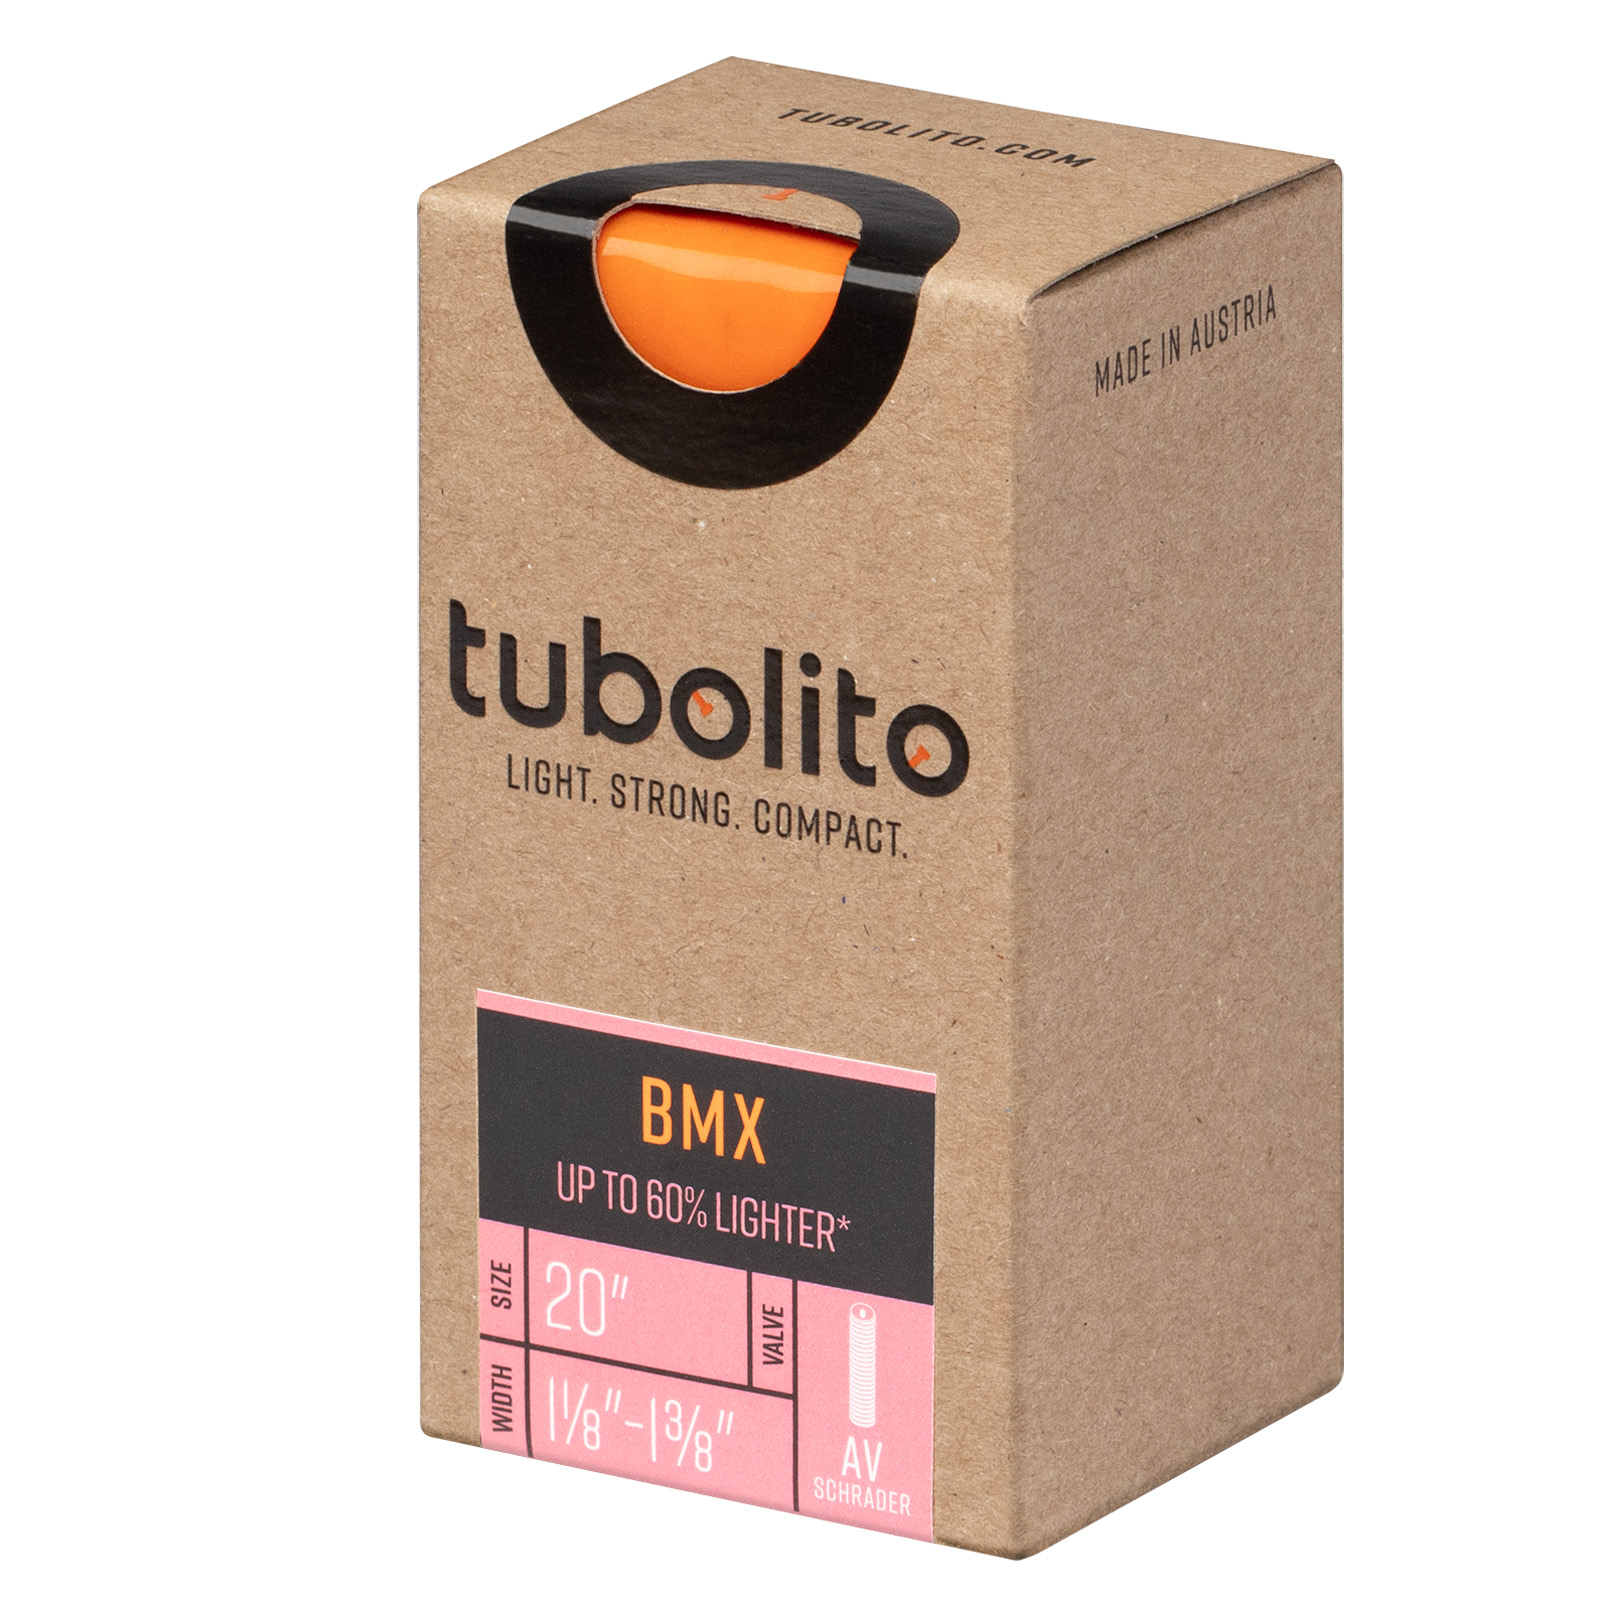 Productfoto van Tubolito Tubo BMX Tube - 20&quot;x1-1/8-1-3/8&quot; - Schrader Valve